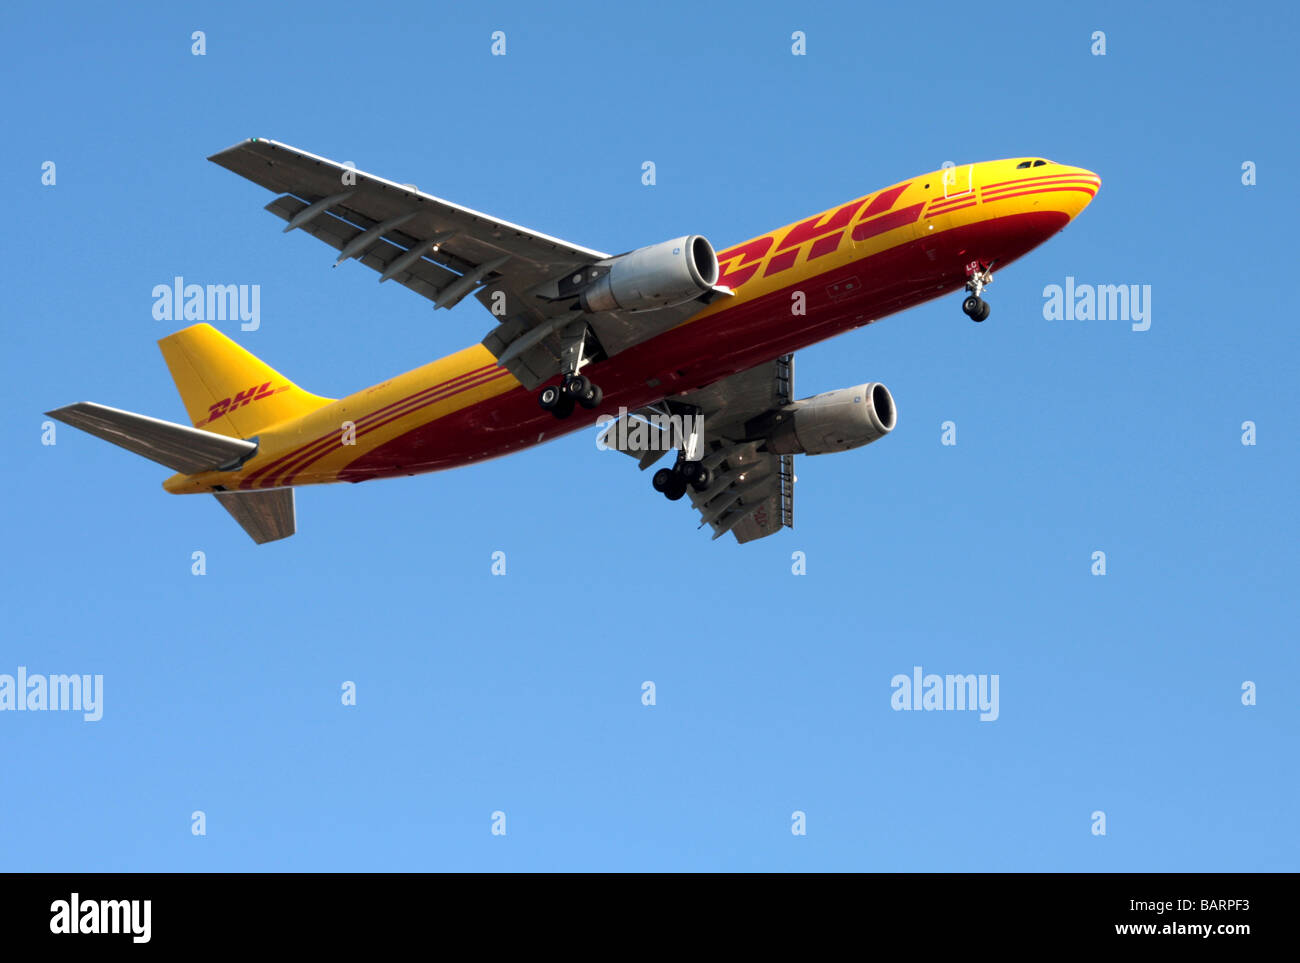 dhl cargo plane Stock Photo